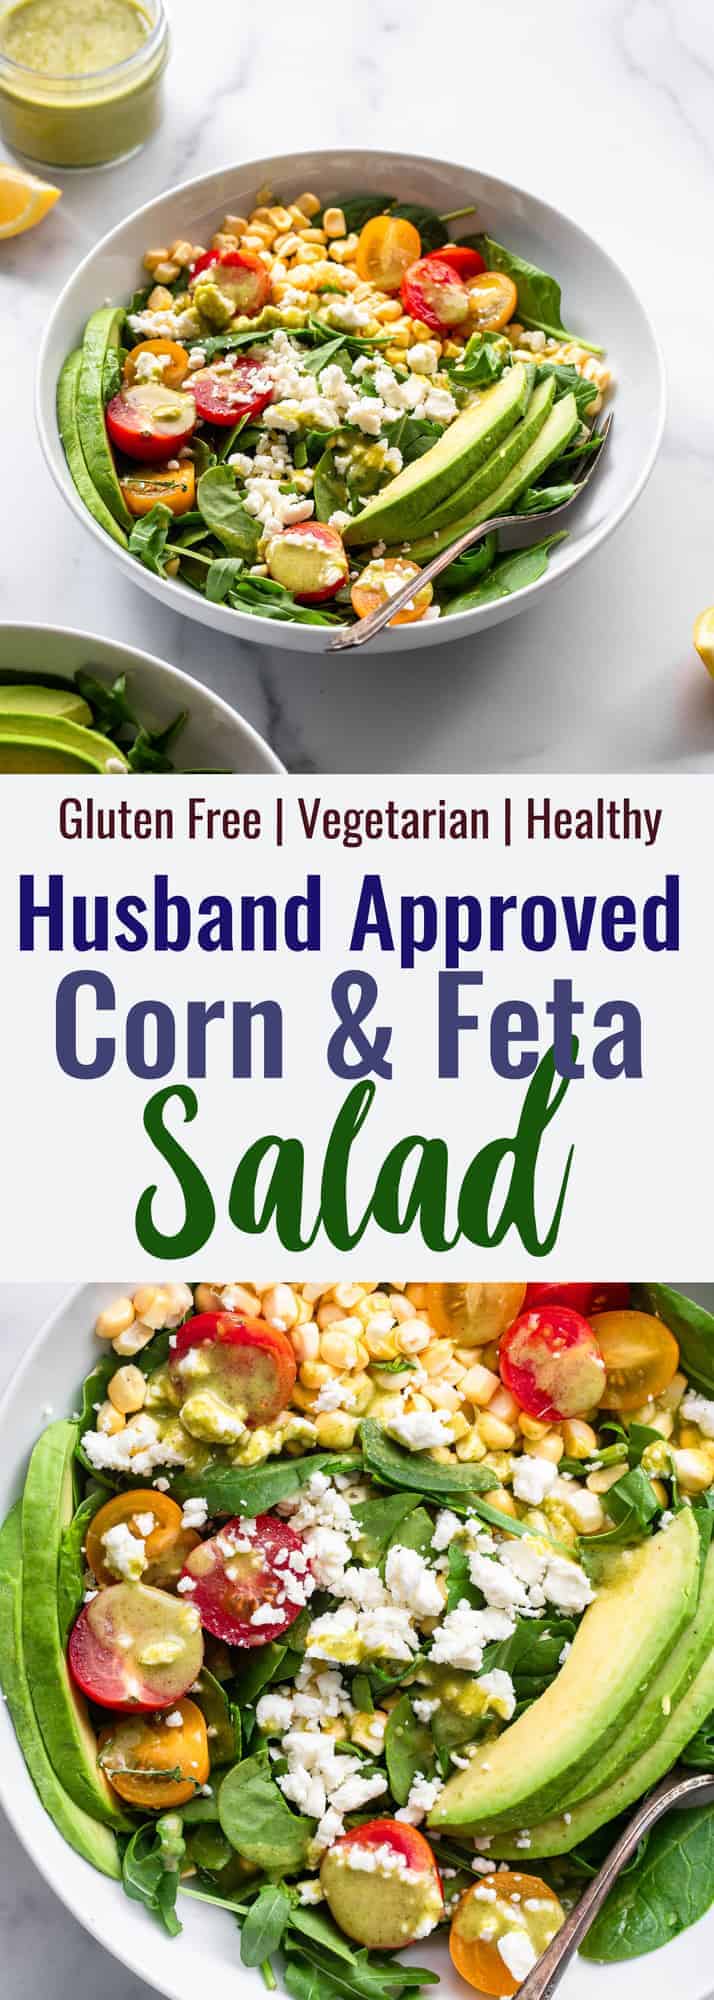 corn feta salad collage photo